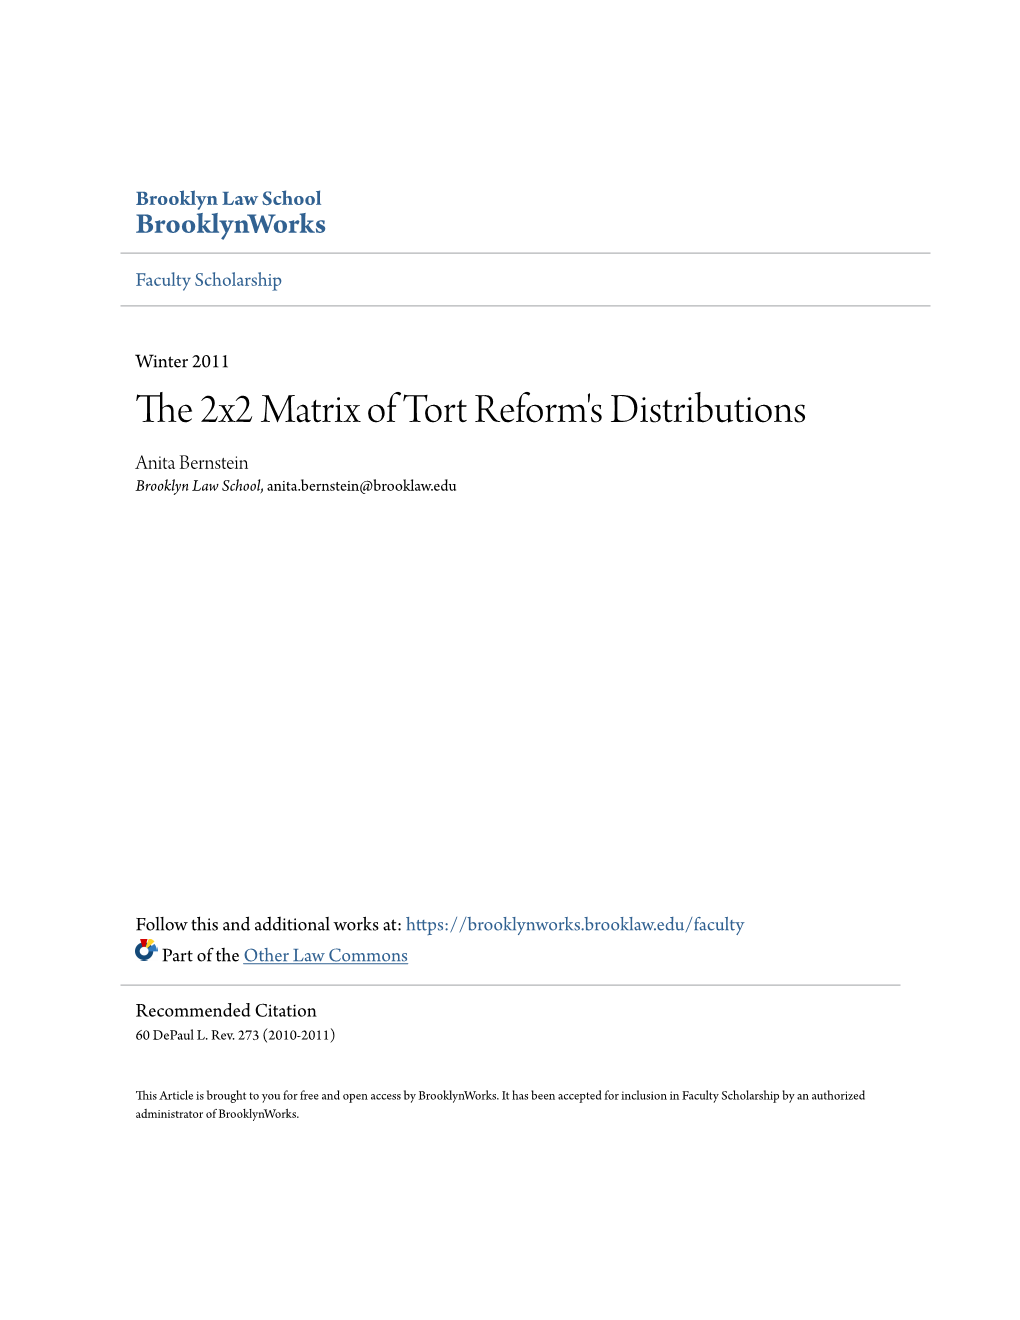 THE 2X2 MATRIX of TORT REFORM's DISTRIBUTIONS